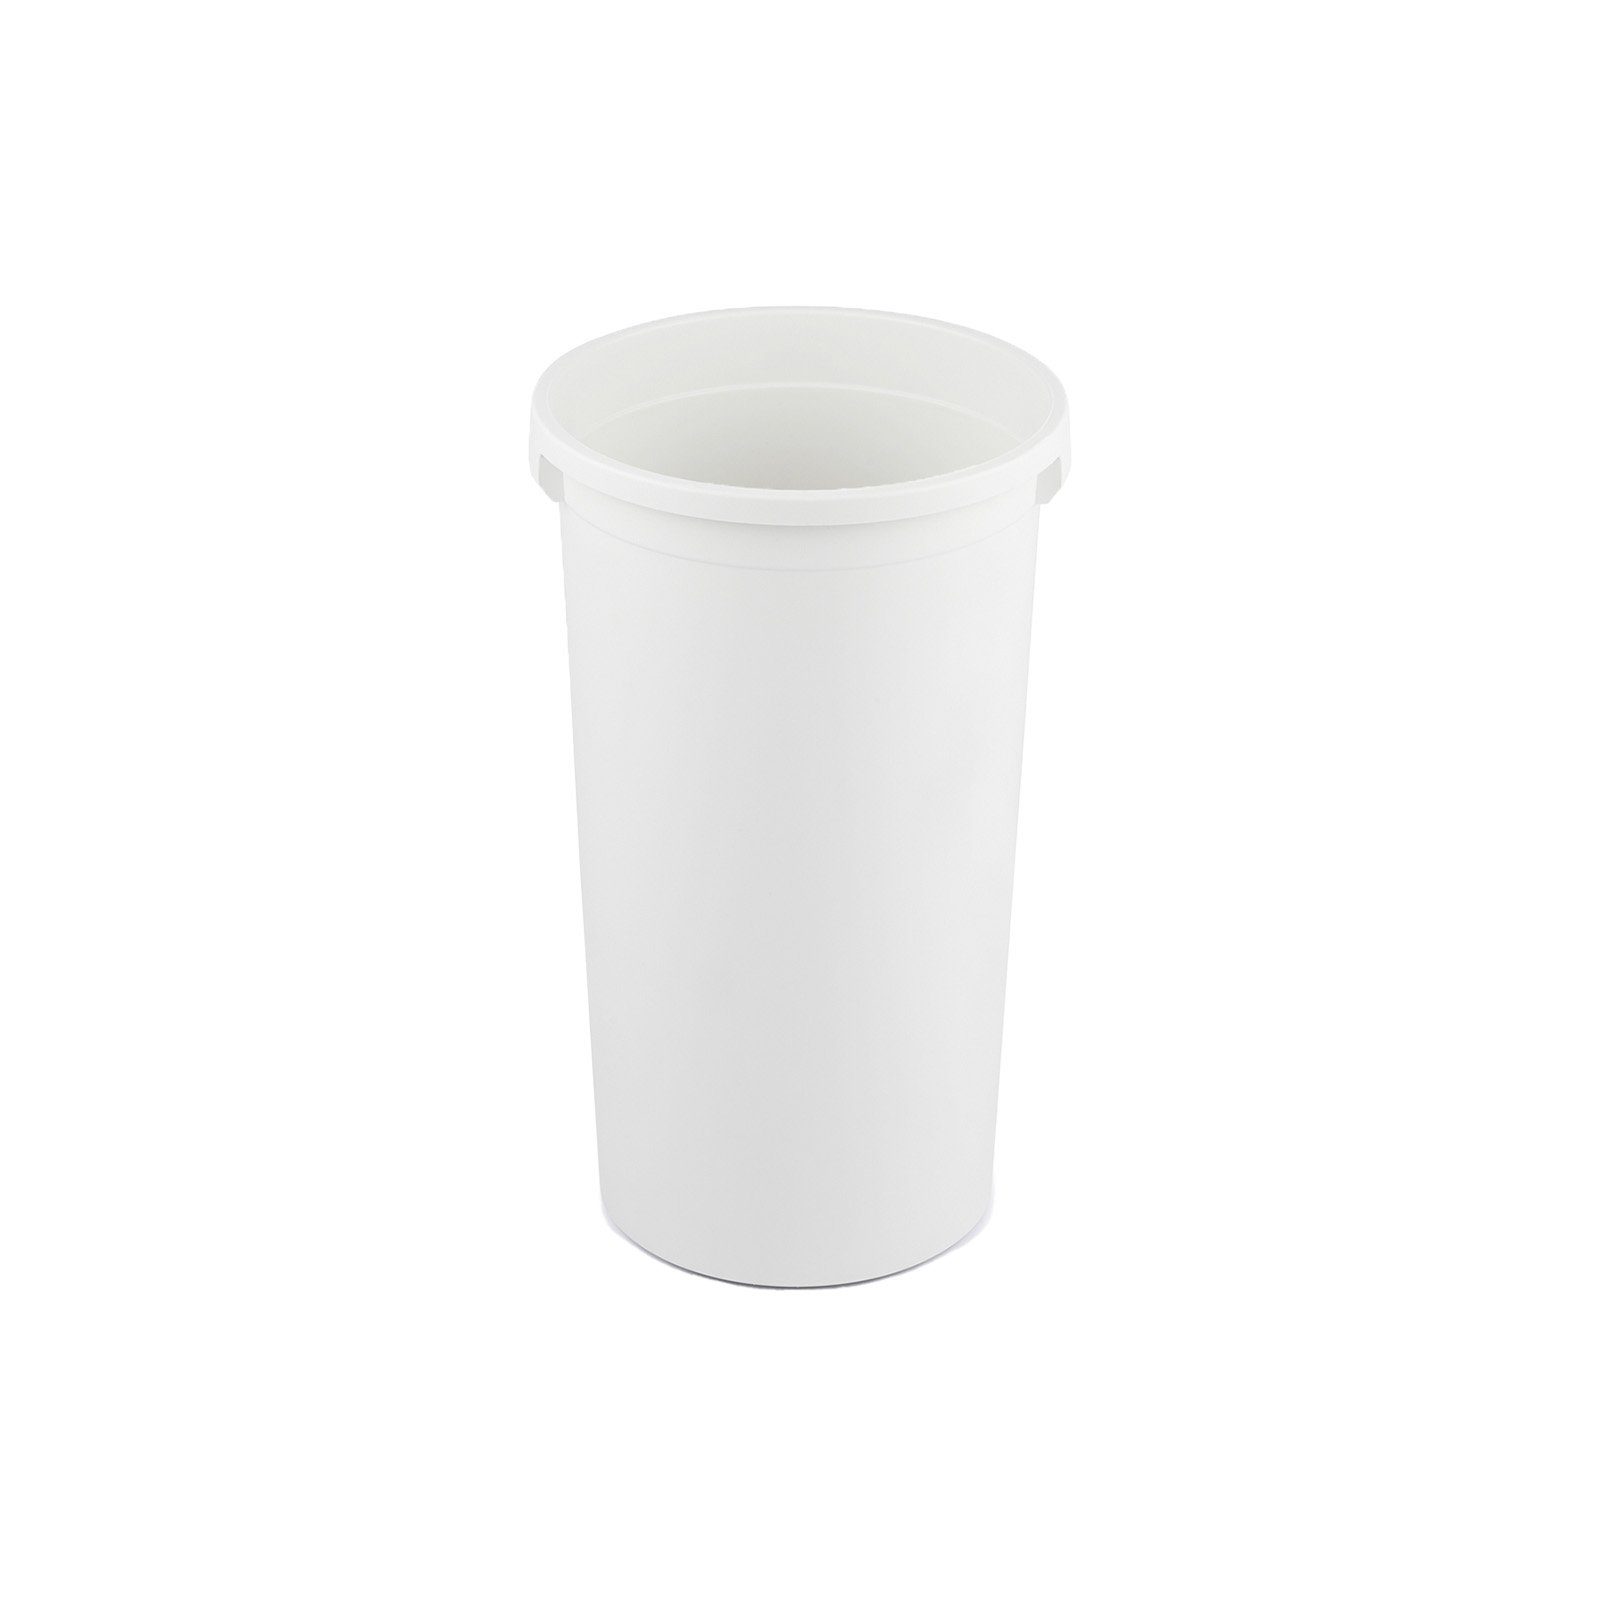 ROTHO Mülleimer Pro Modo Mülleimer BPA-frei Deckel, Kunststoff ohne 50l (PP)